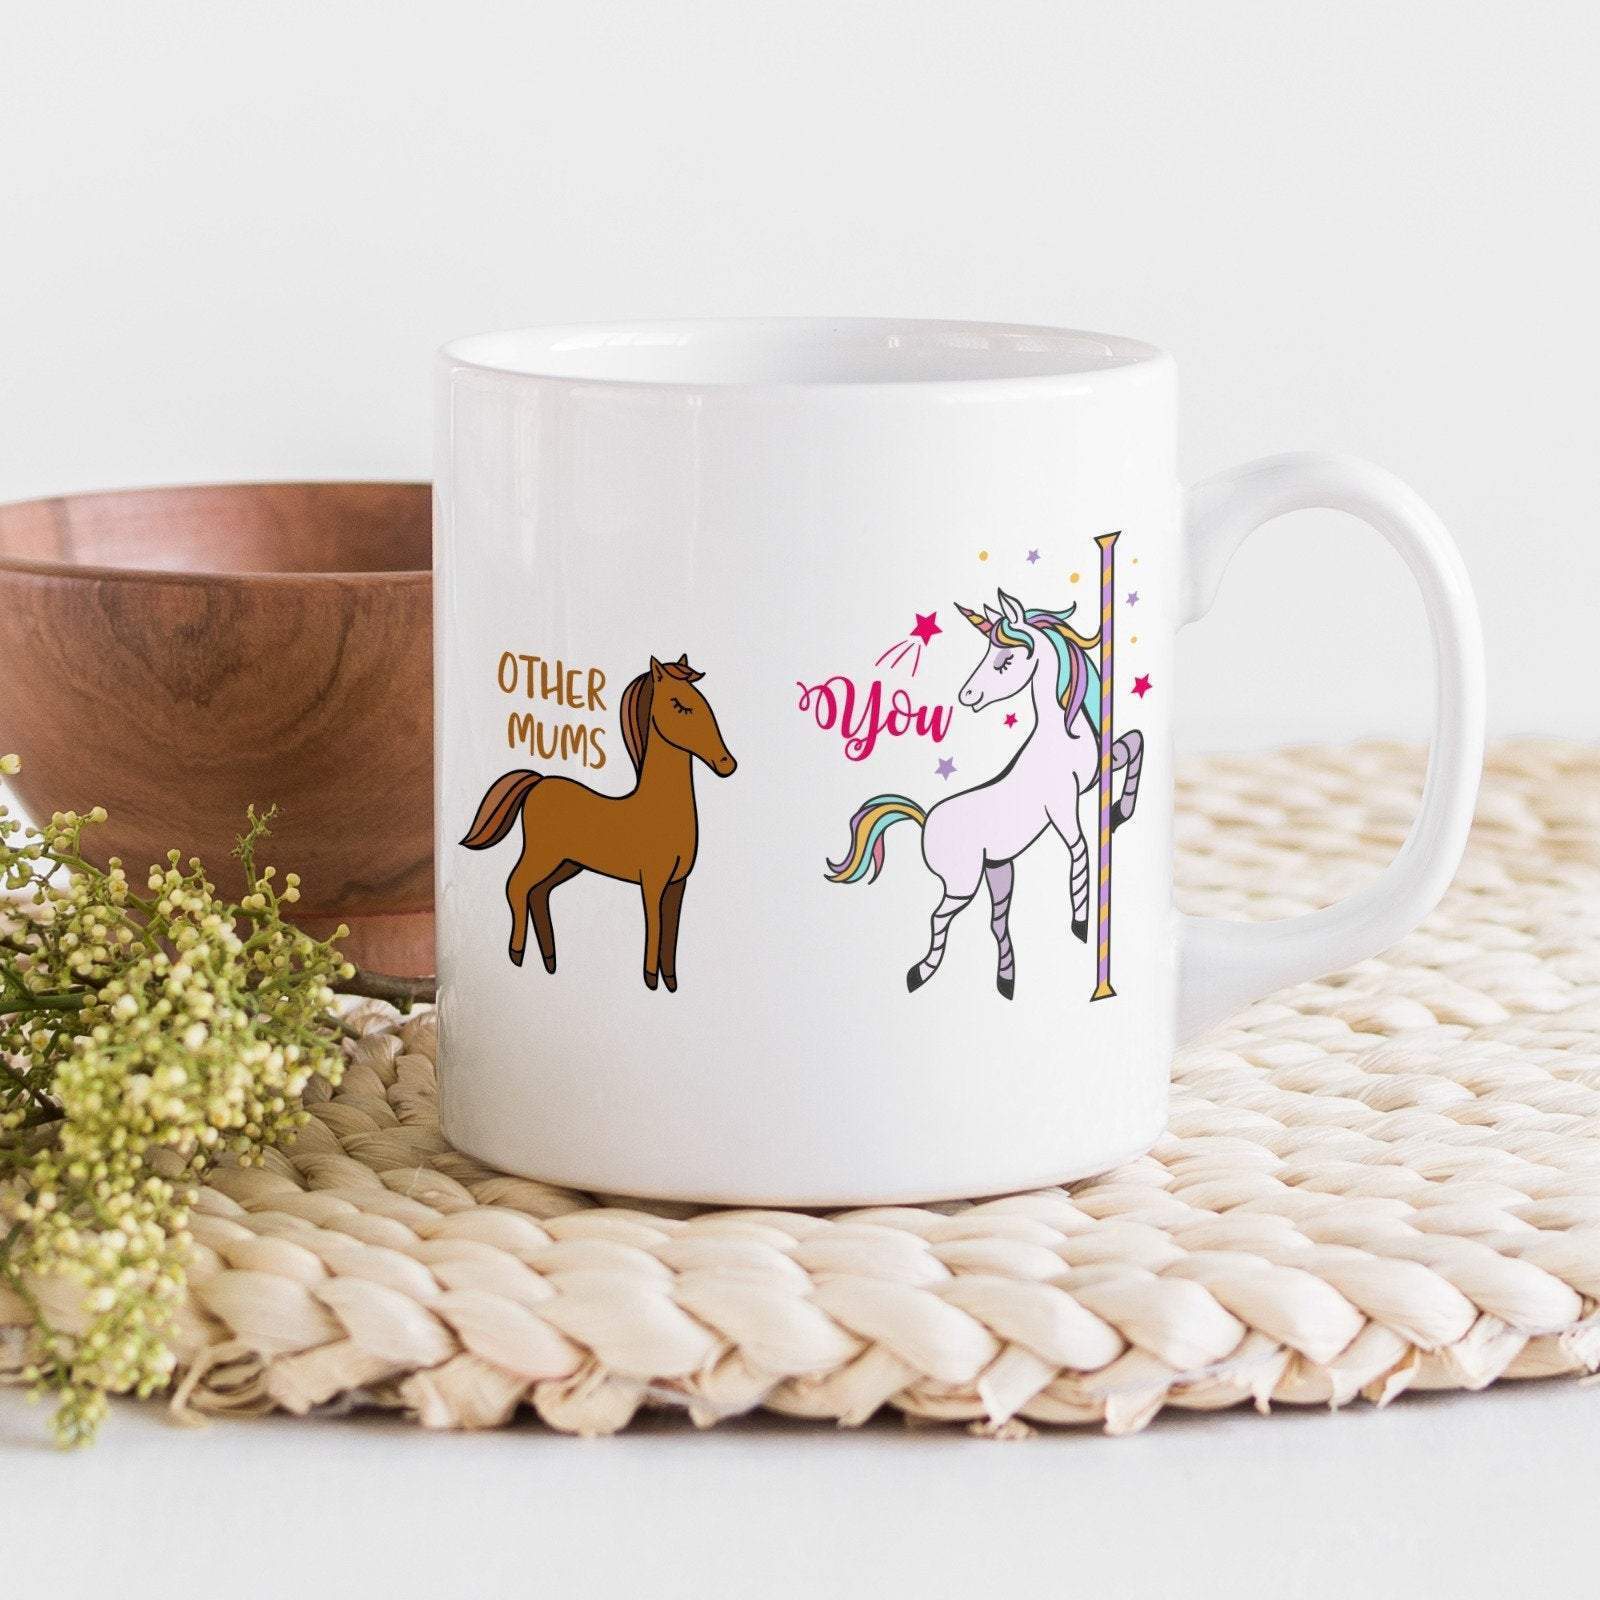 Funny mum mug with Horse & Unicorn, Cute gift for mum